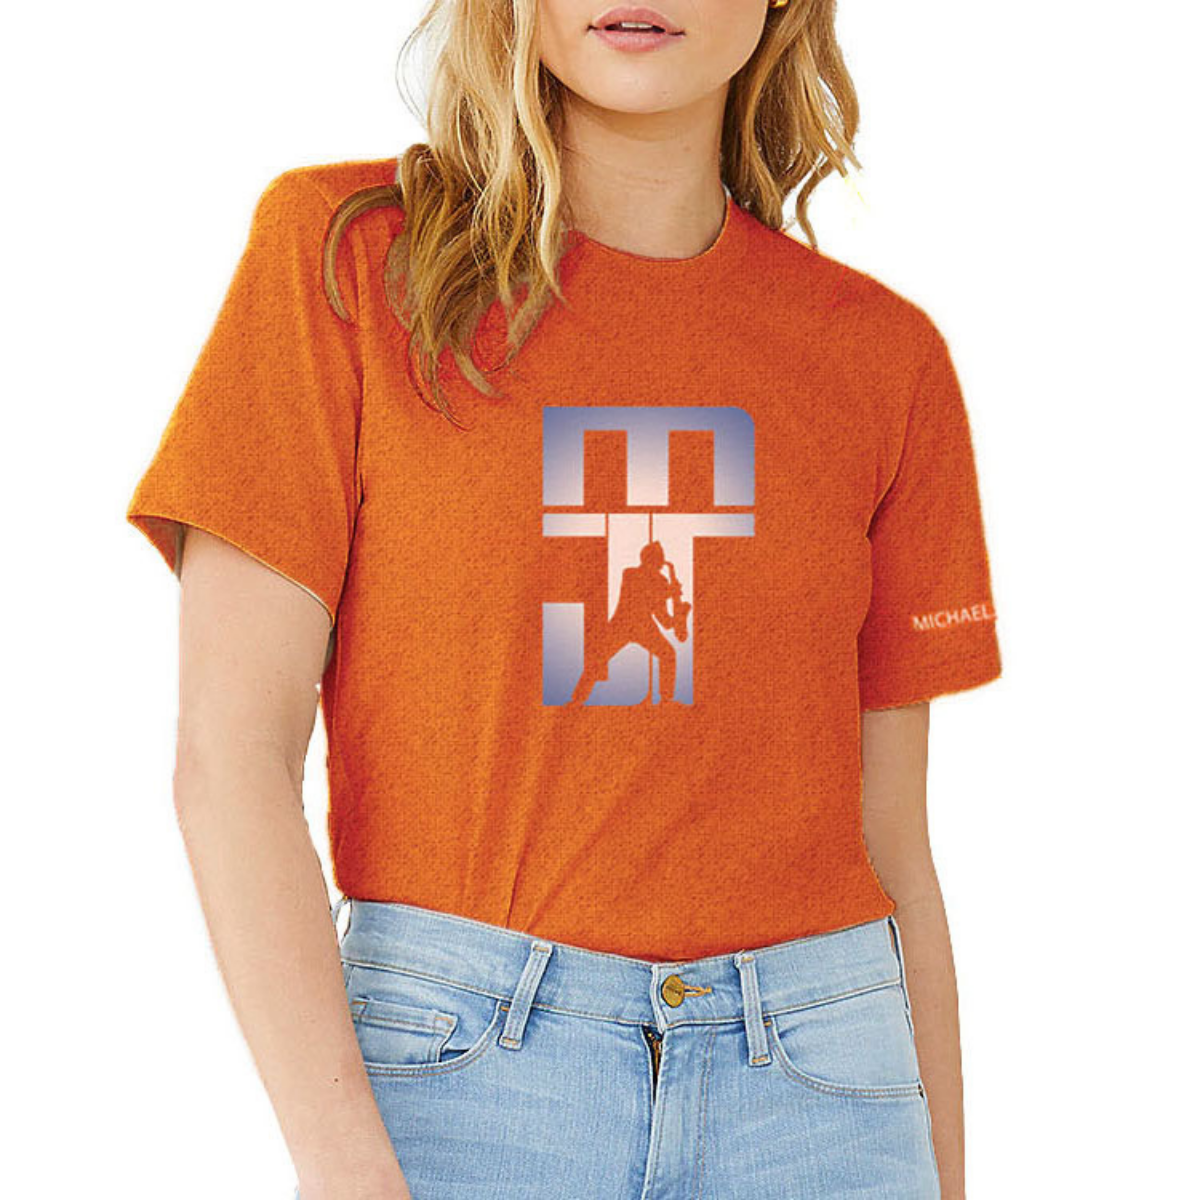 MJT - Unisex T-shirt, Burnt Orange